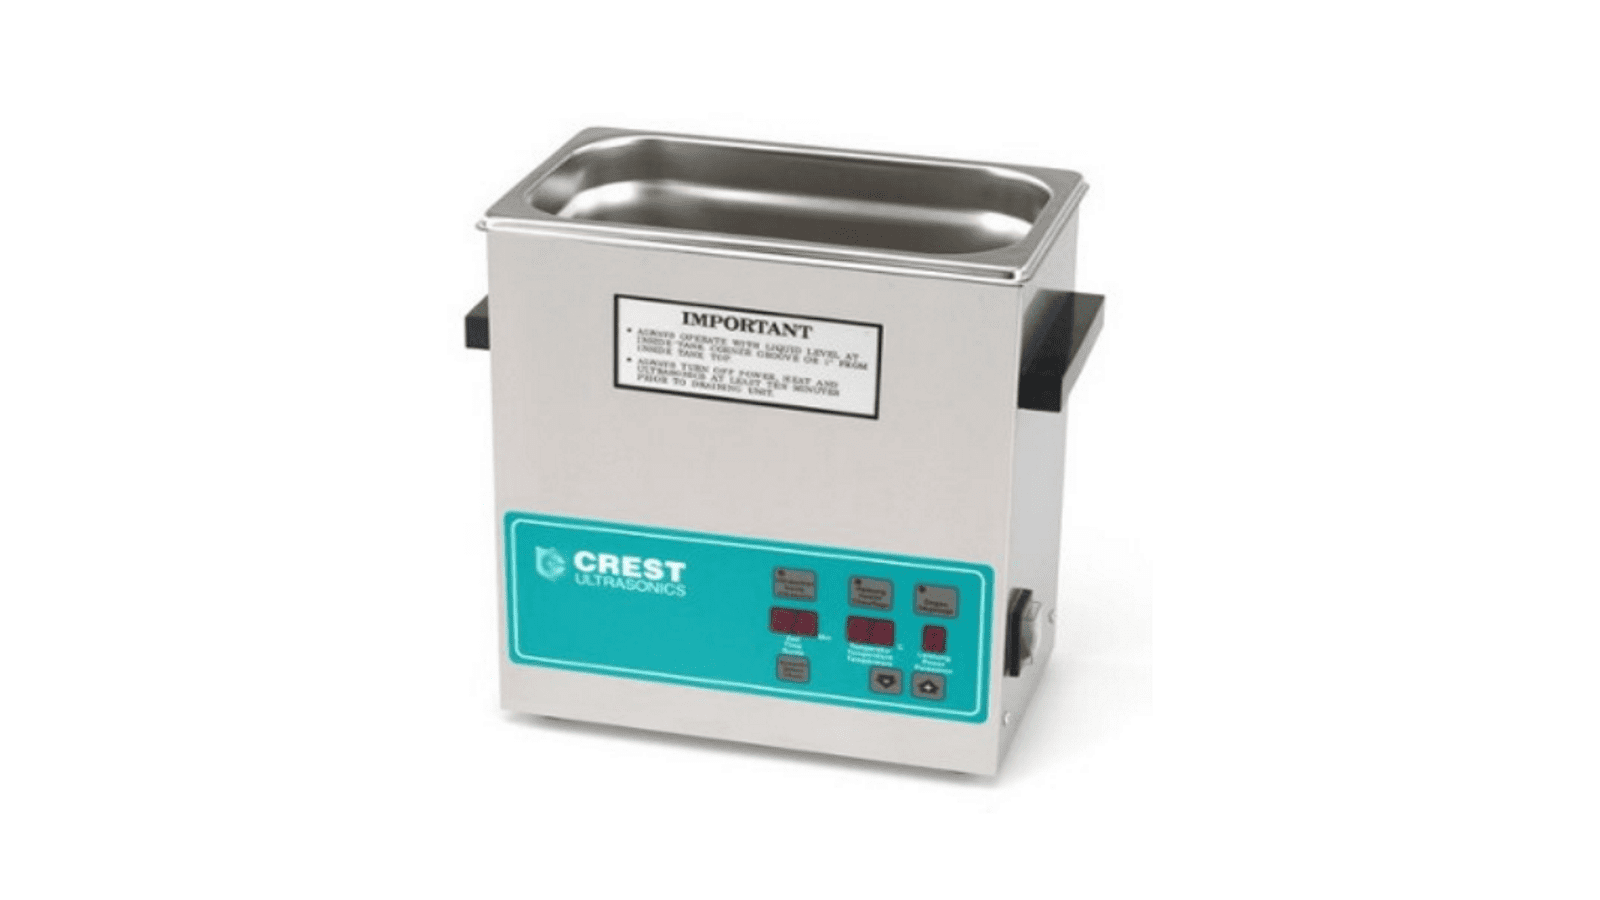 Crest powersonic p230h ultrasonic cleaner